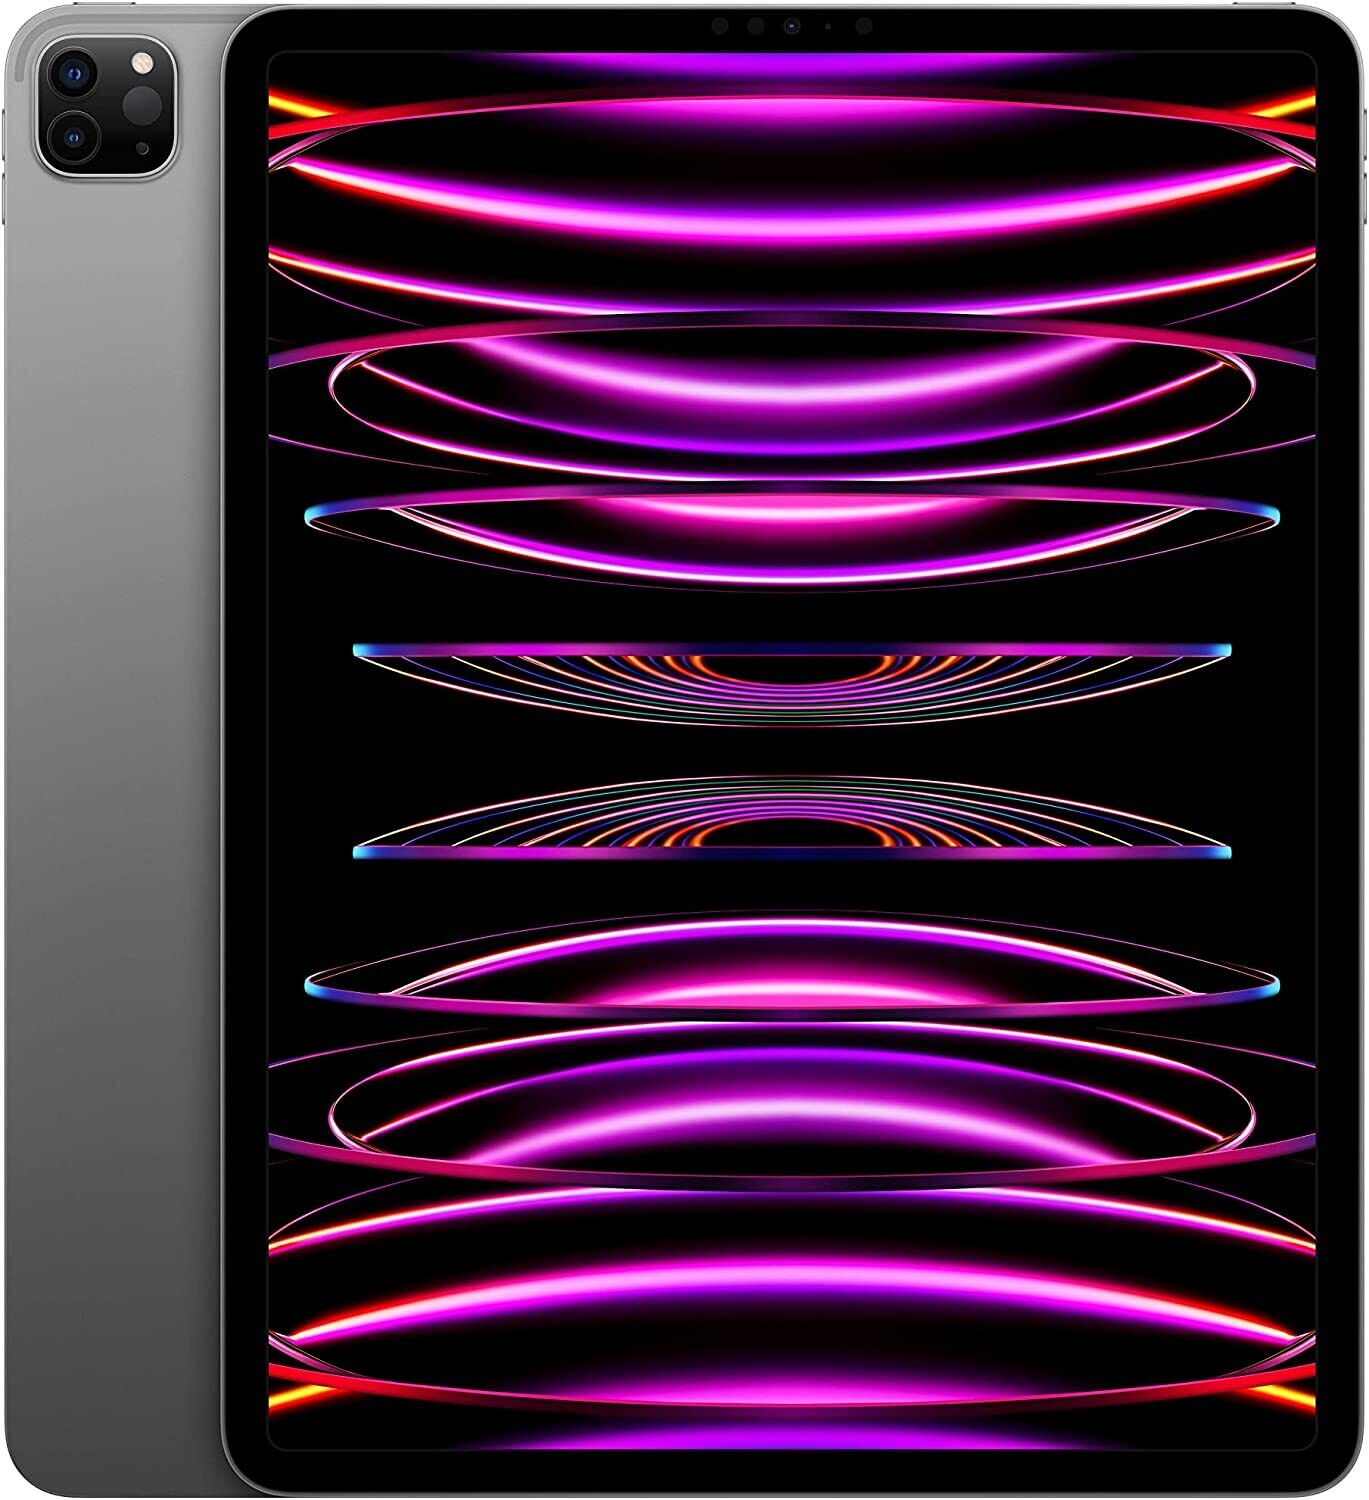 2022 Apple 12.9-inch iPad Pro (Wi-Fi + Cellular, 2TB) - Space Gray (6th Generation)